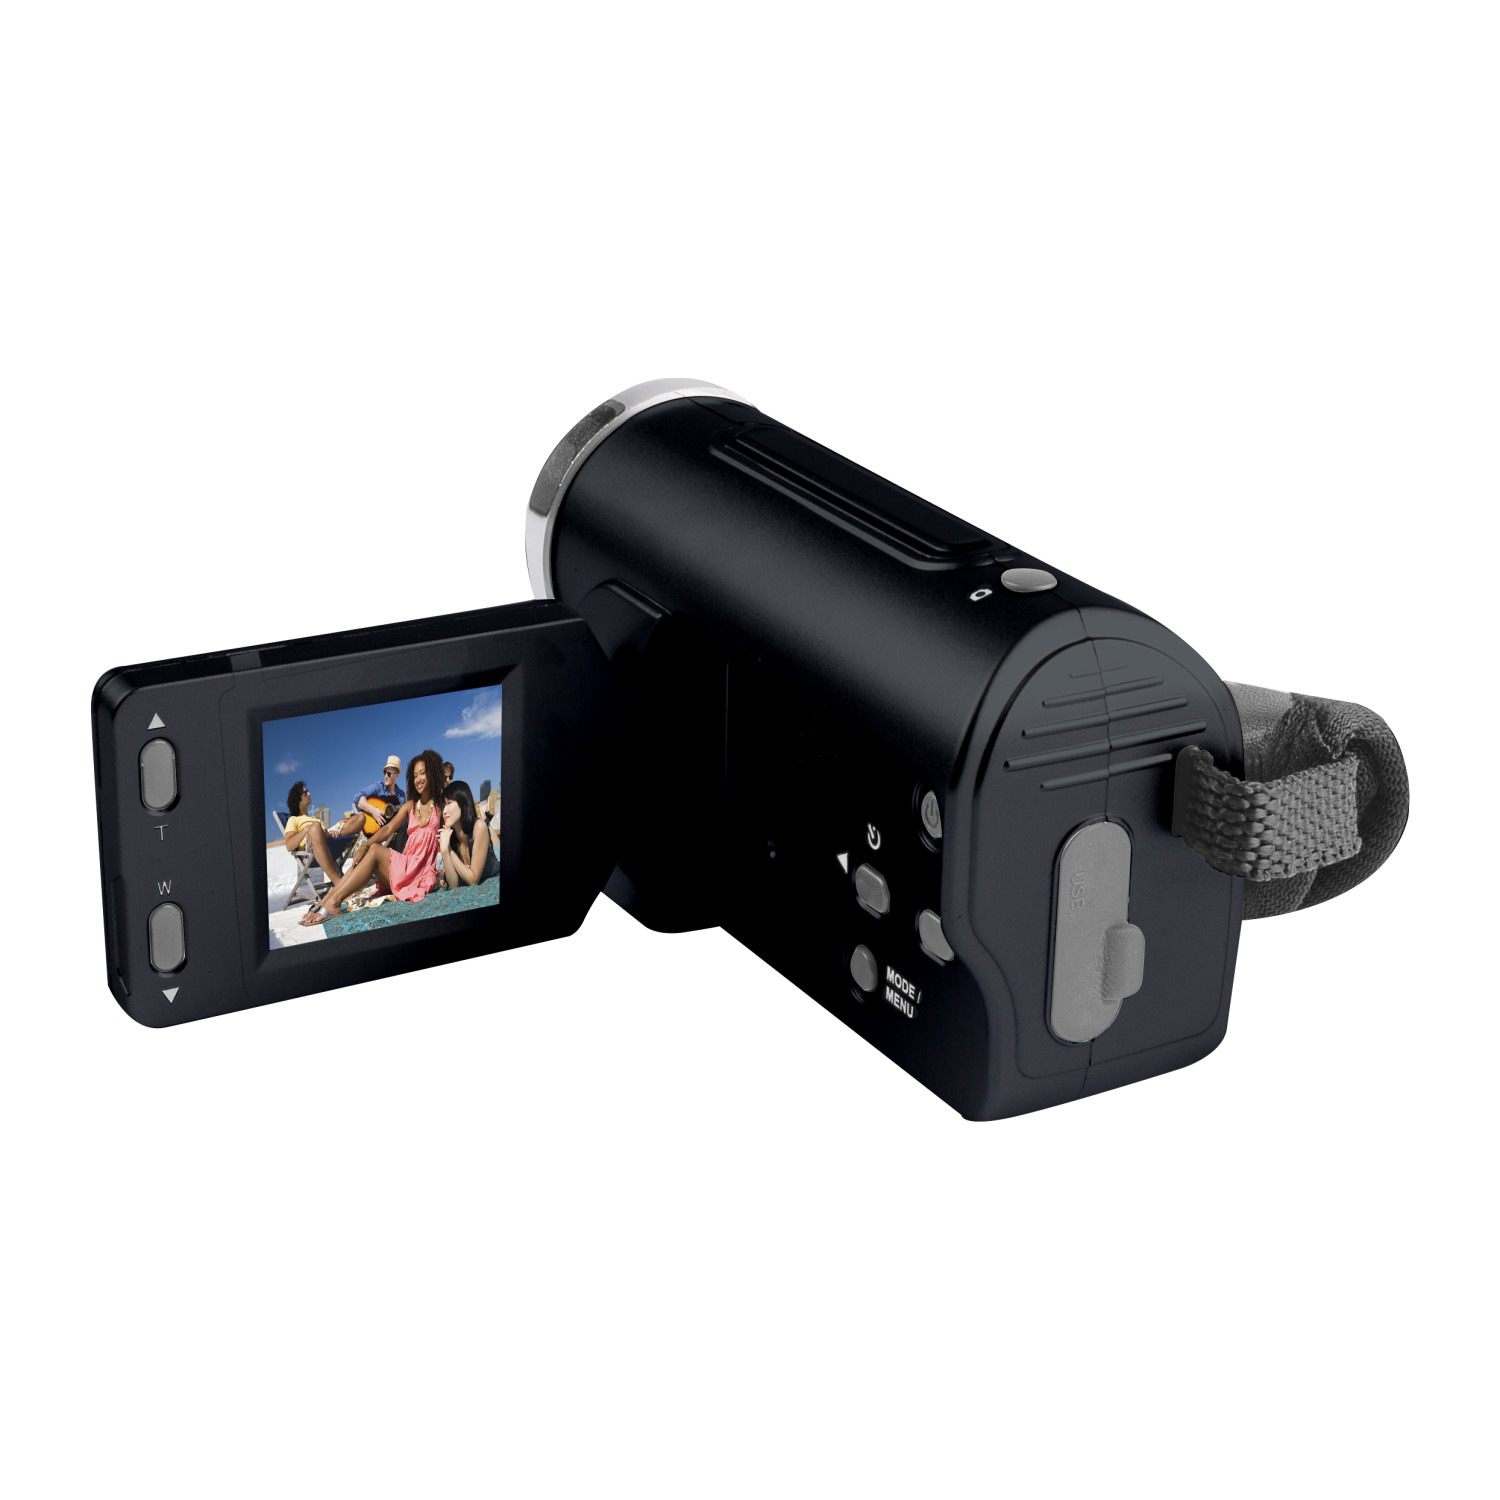 ONN 5 Megapixel Digital Camcorder with 1.5-inch Screen - Walmart.com